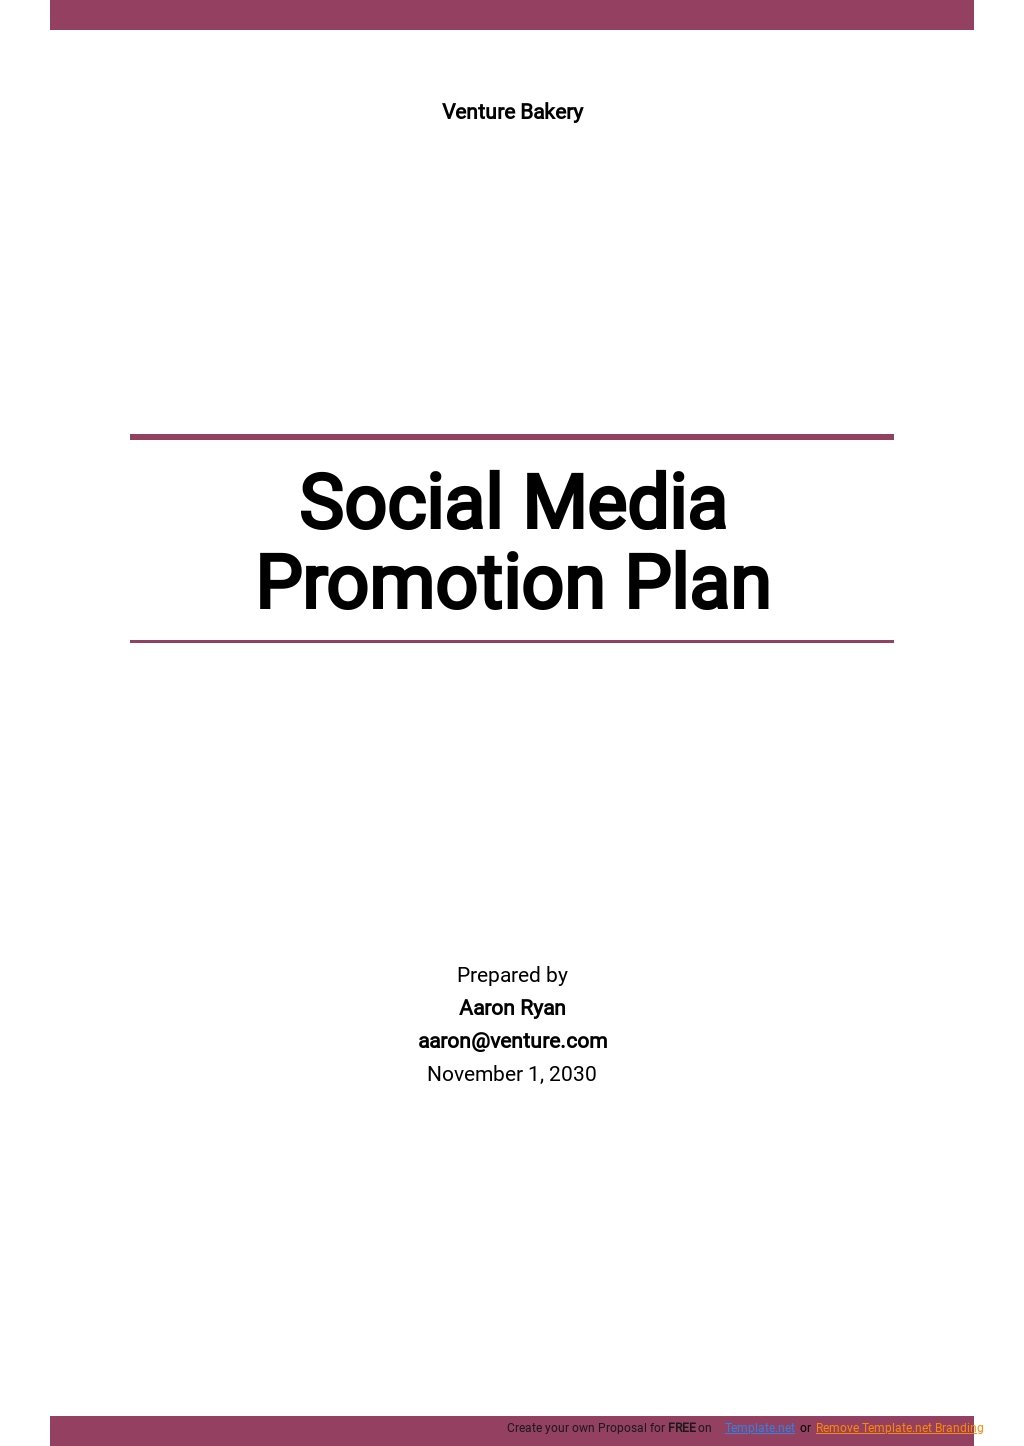 Social Media Promotion Plan Template